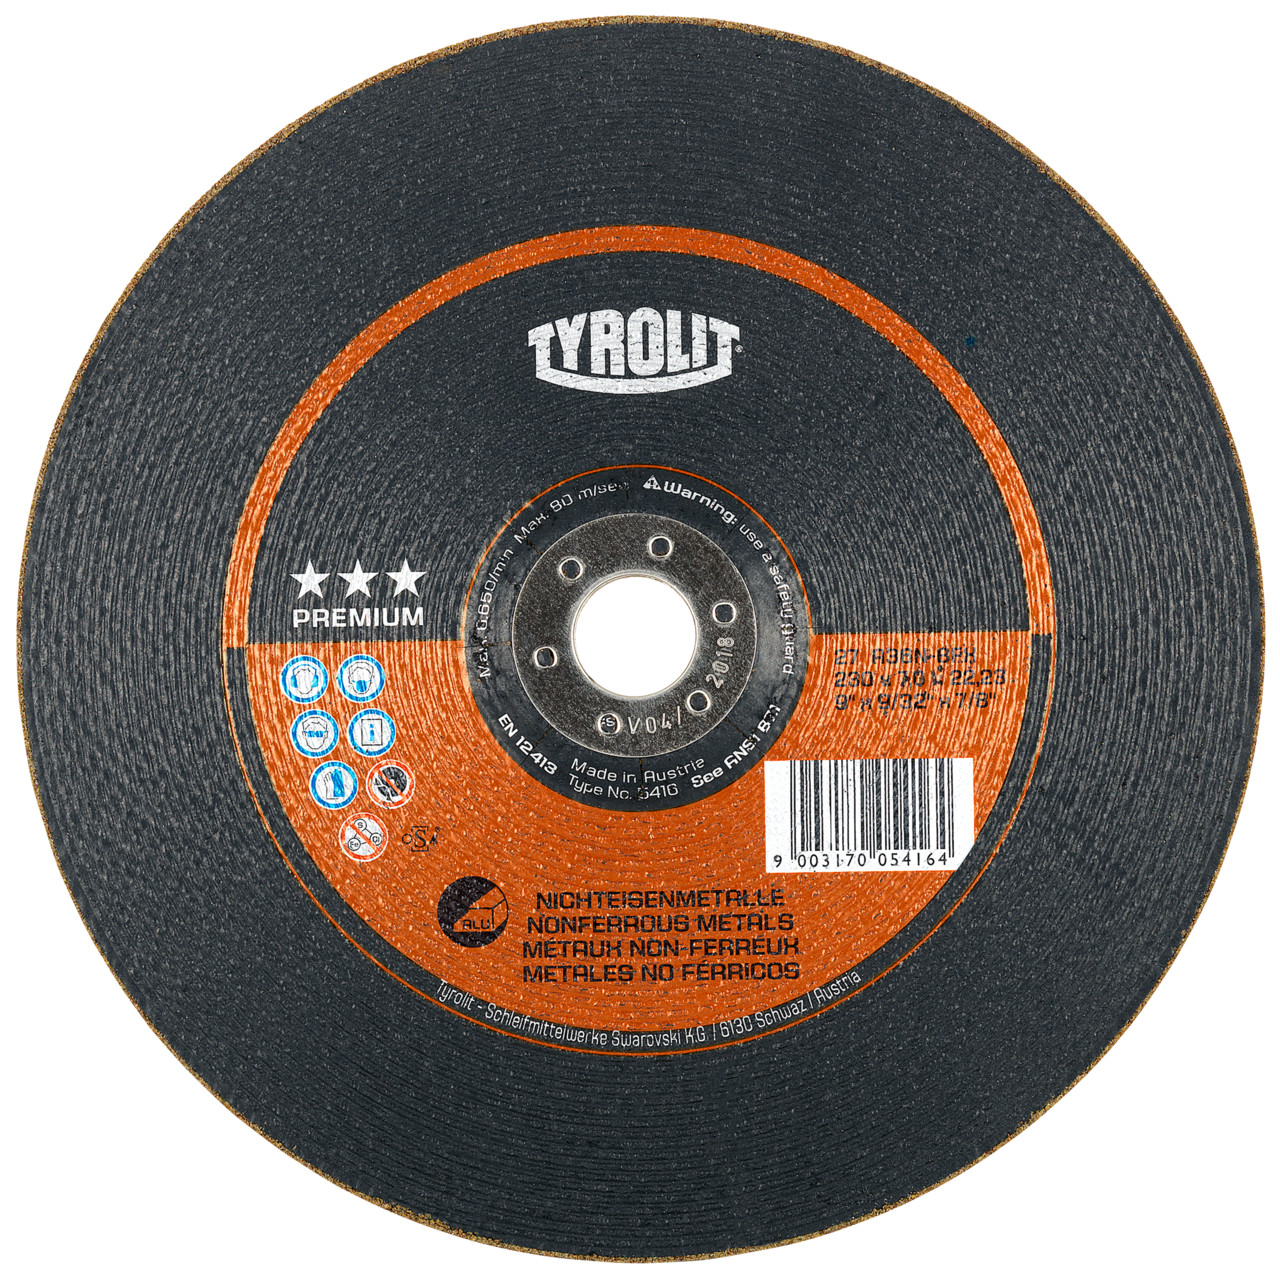 Tyrolit Roughing disc DxUxH 230x7x22.23 For non-ferrous metals, shape: 27 - offset version, Art. 647550